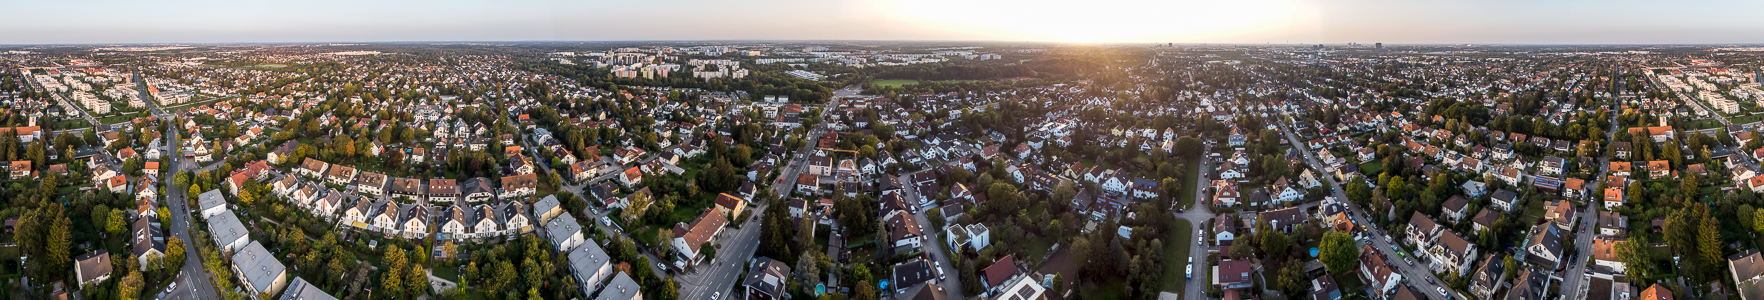 München Trudering Luftbild aerial photo